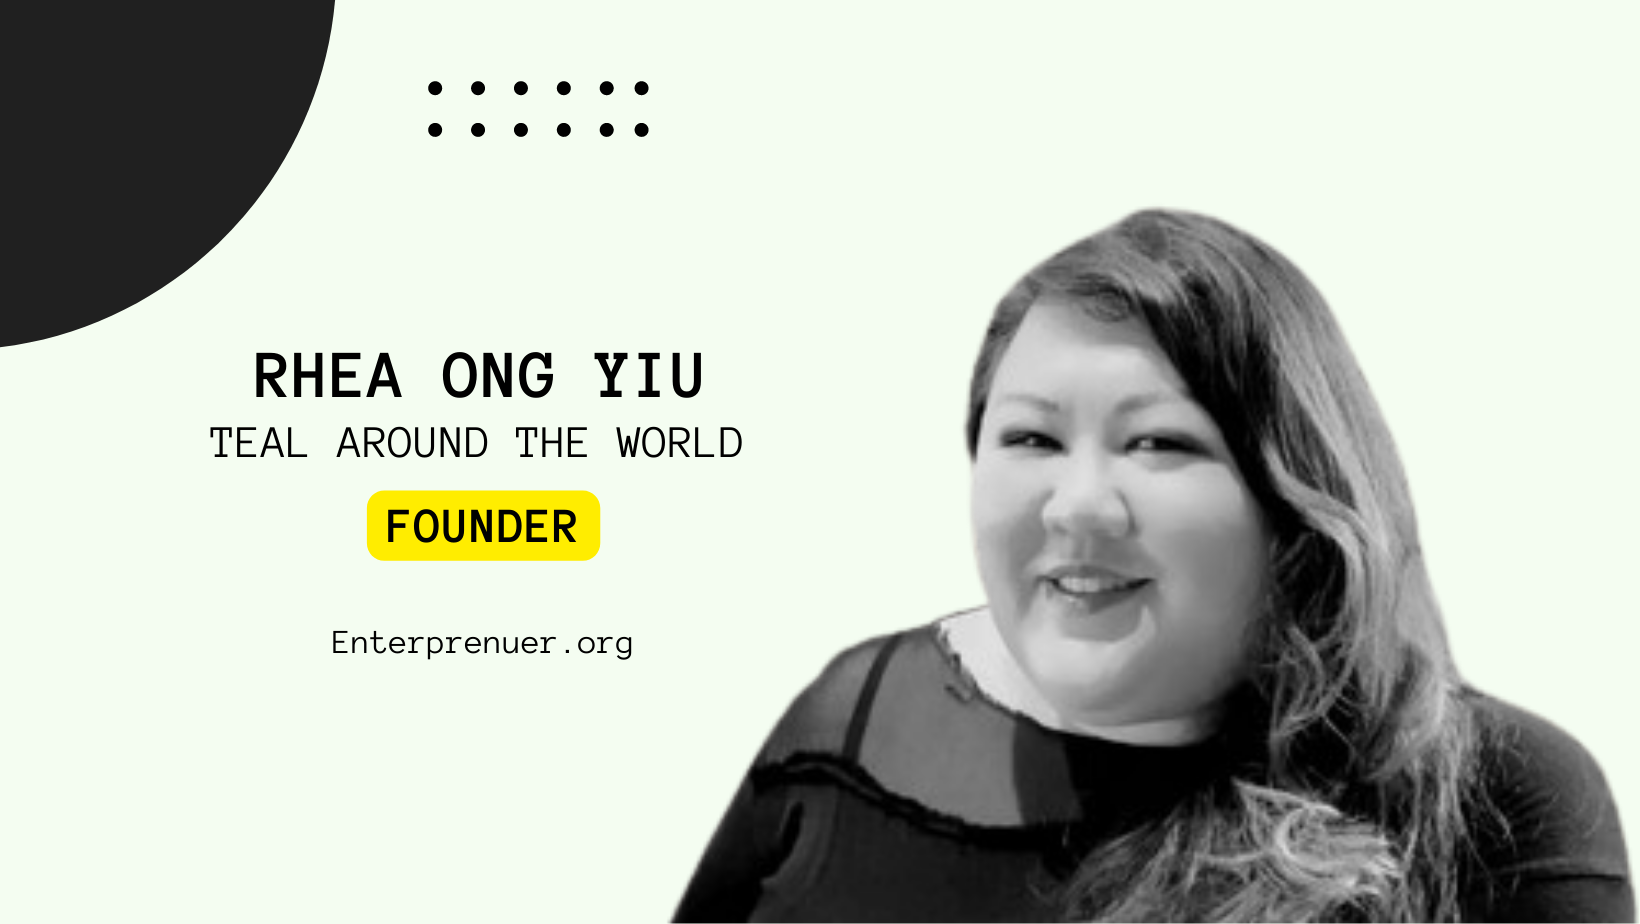 Meet Rhea Ong Yiu Co-Founder of Teal Around the World